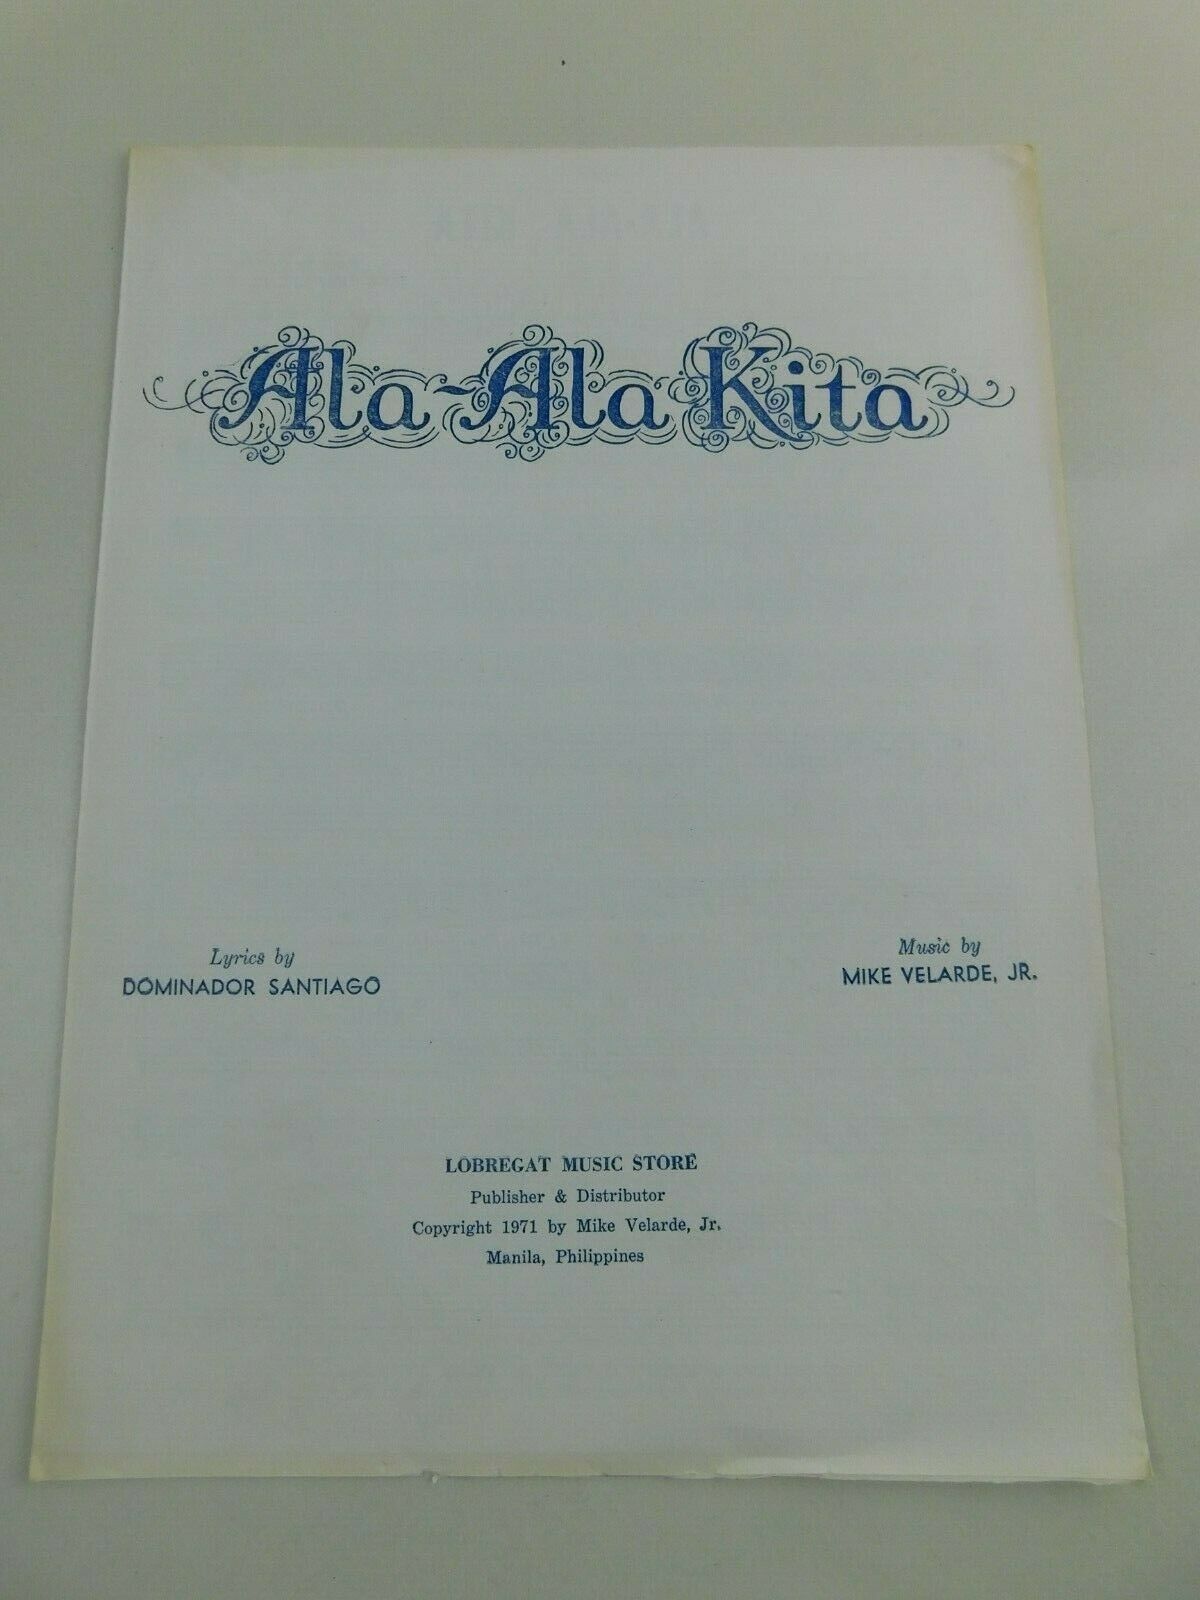 Rare 1971 Ala Ala Kita Sheet Music Dominador Santiago,mike Velarde Jr "filipino"